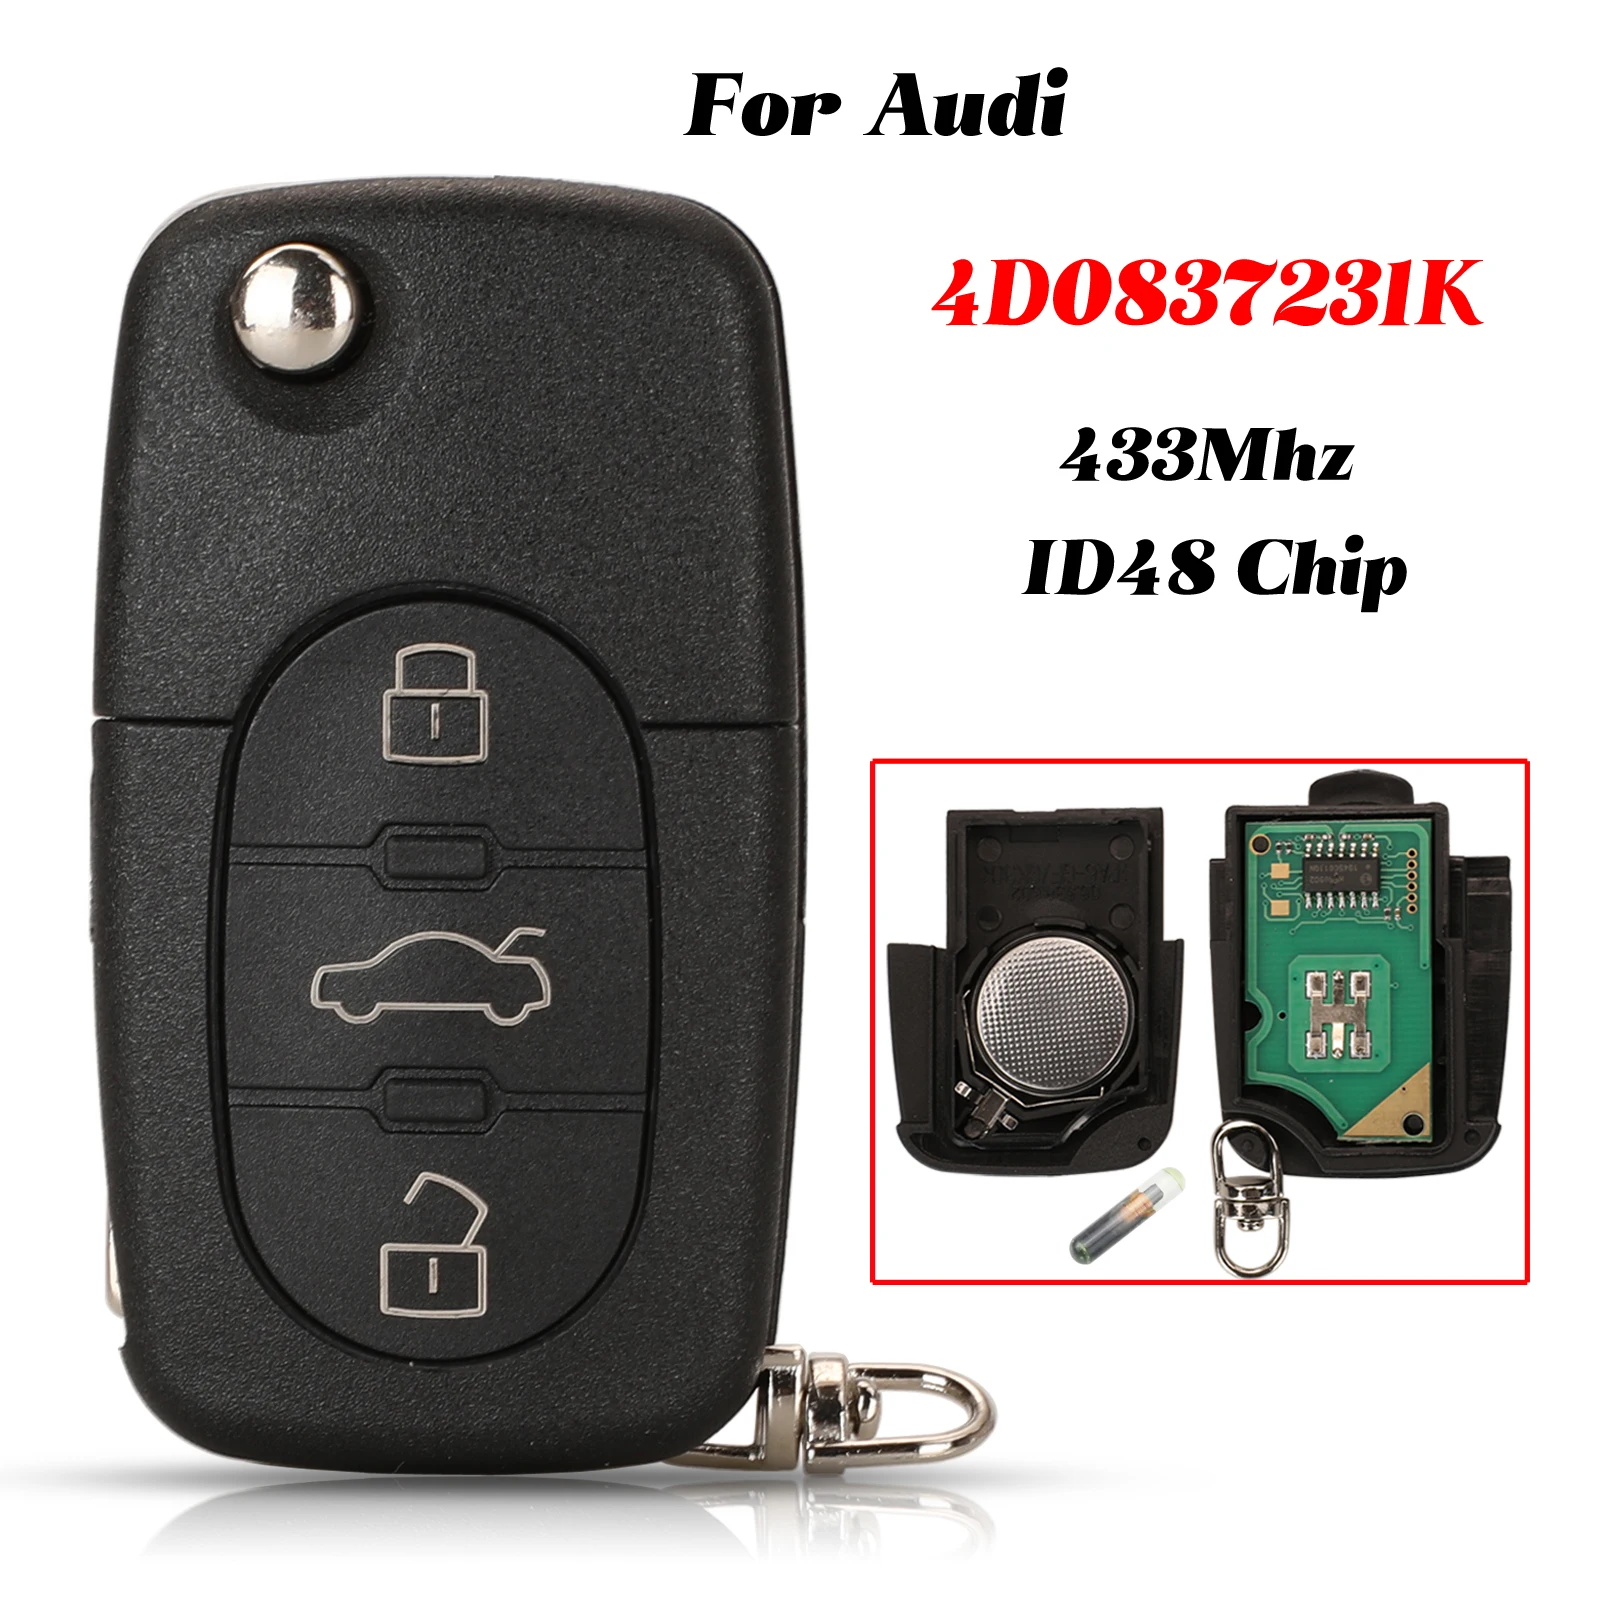 

jingyuqin 3 Buttons Smart Remote Car Key 433Mhz ID48 Chip Fob For Audi A2 A3 A4 A6 A8 TT Old Models FCC: 4D0 837 231 K